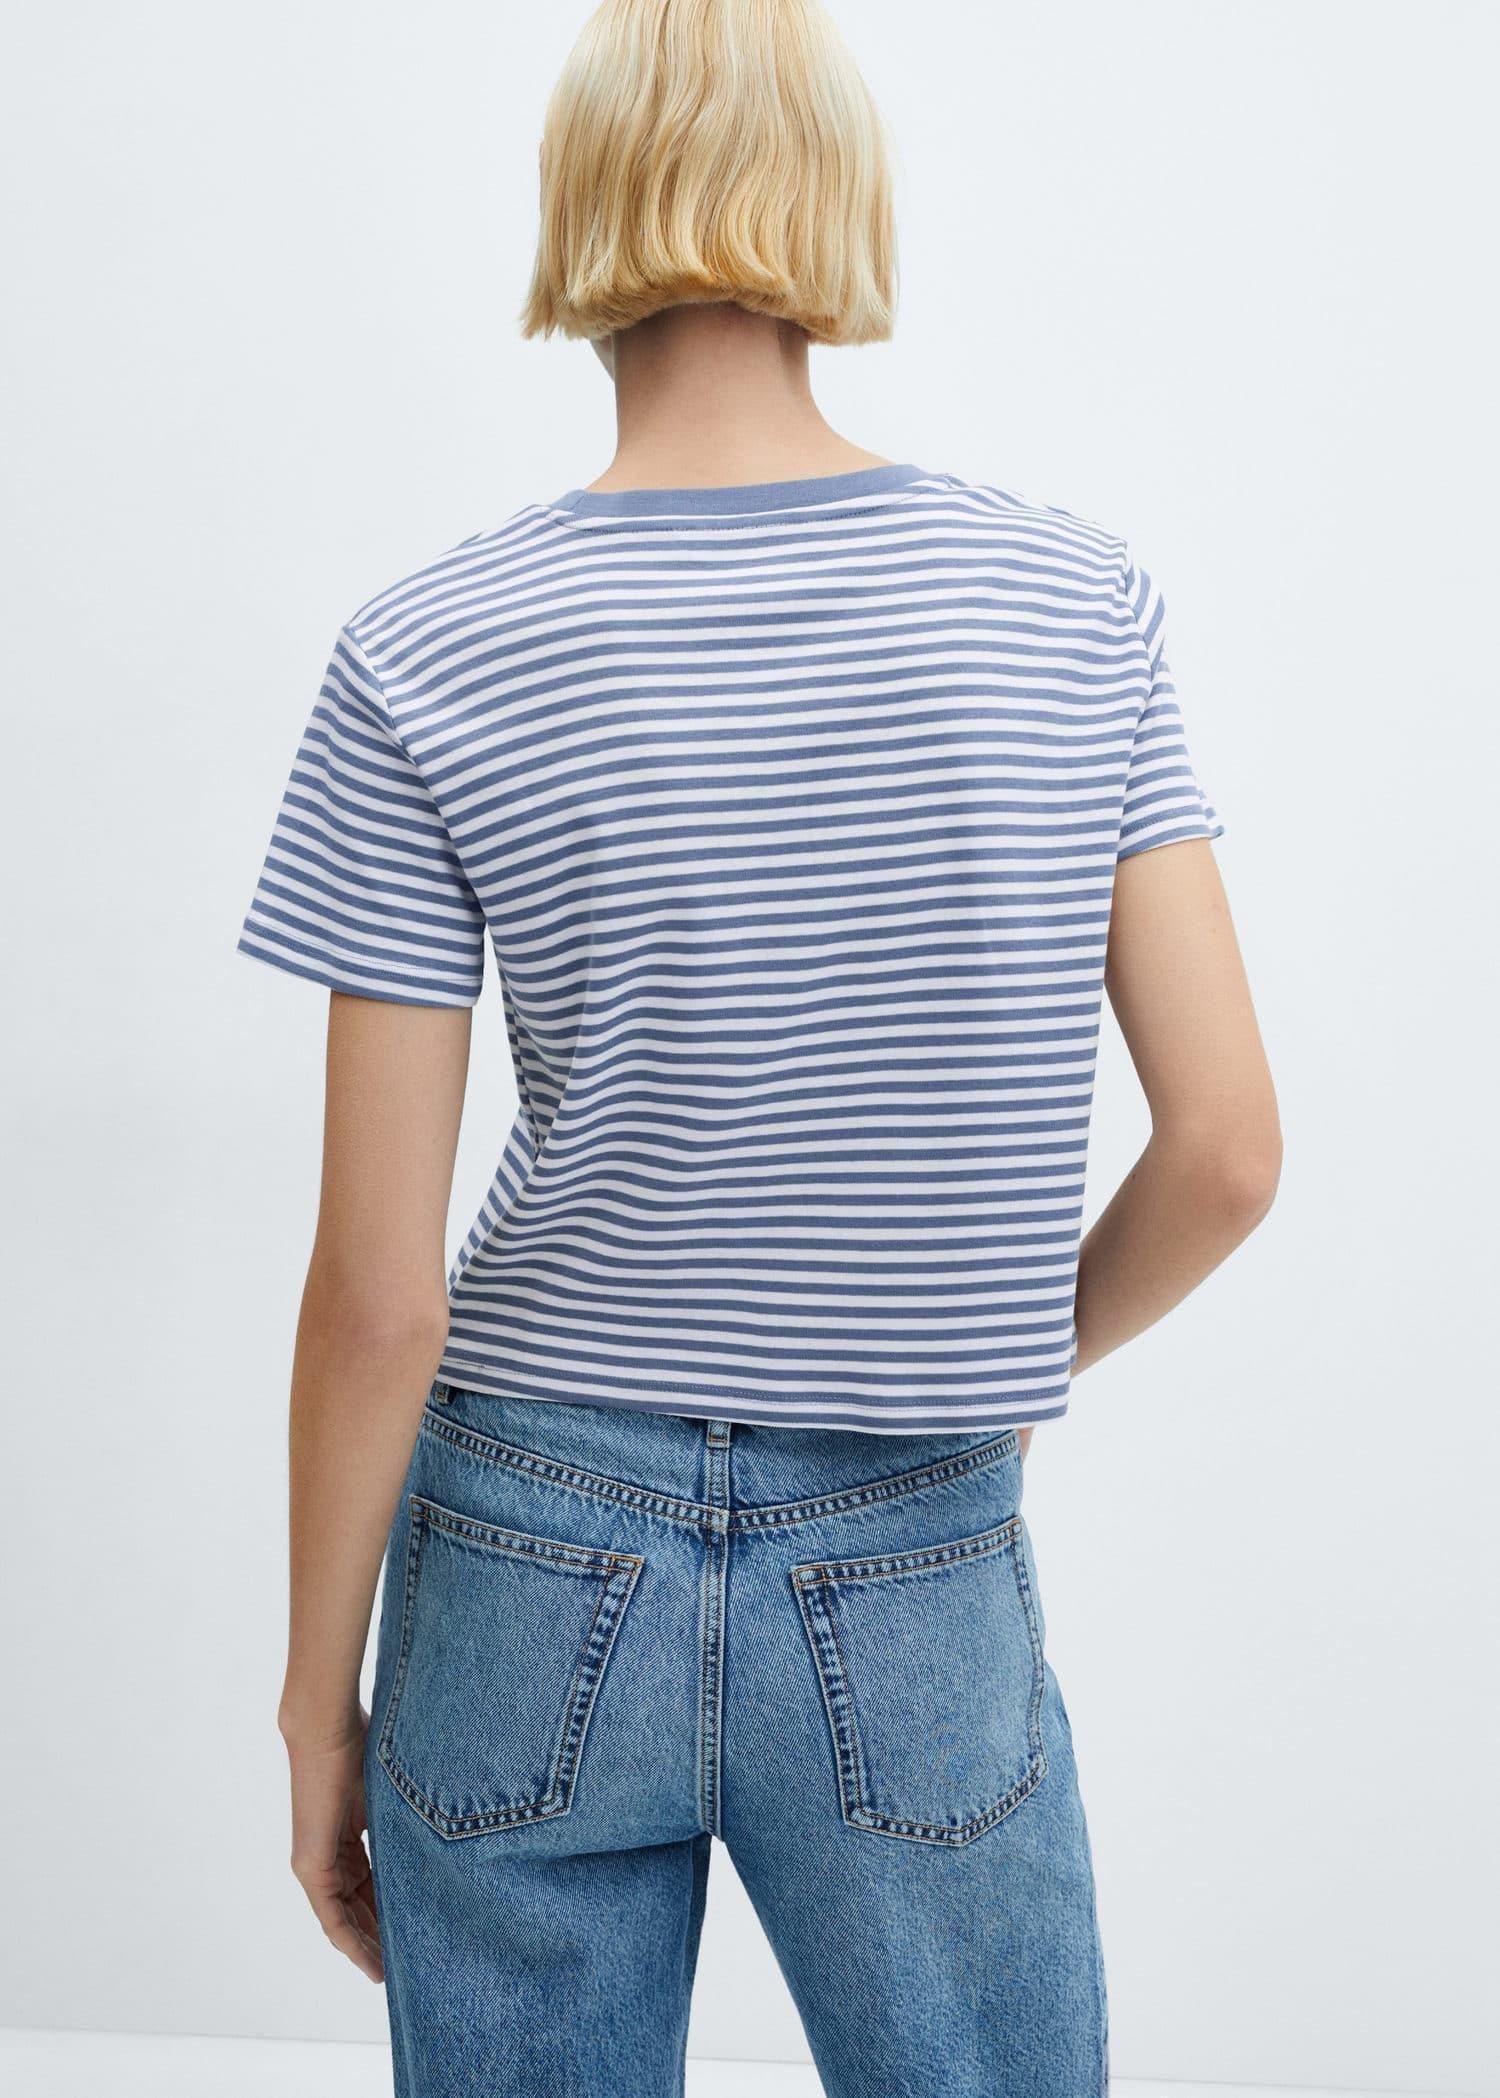 Mango - Blue Striped Short-Sleeved T-Shirt